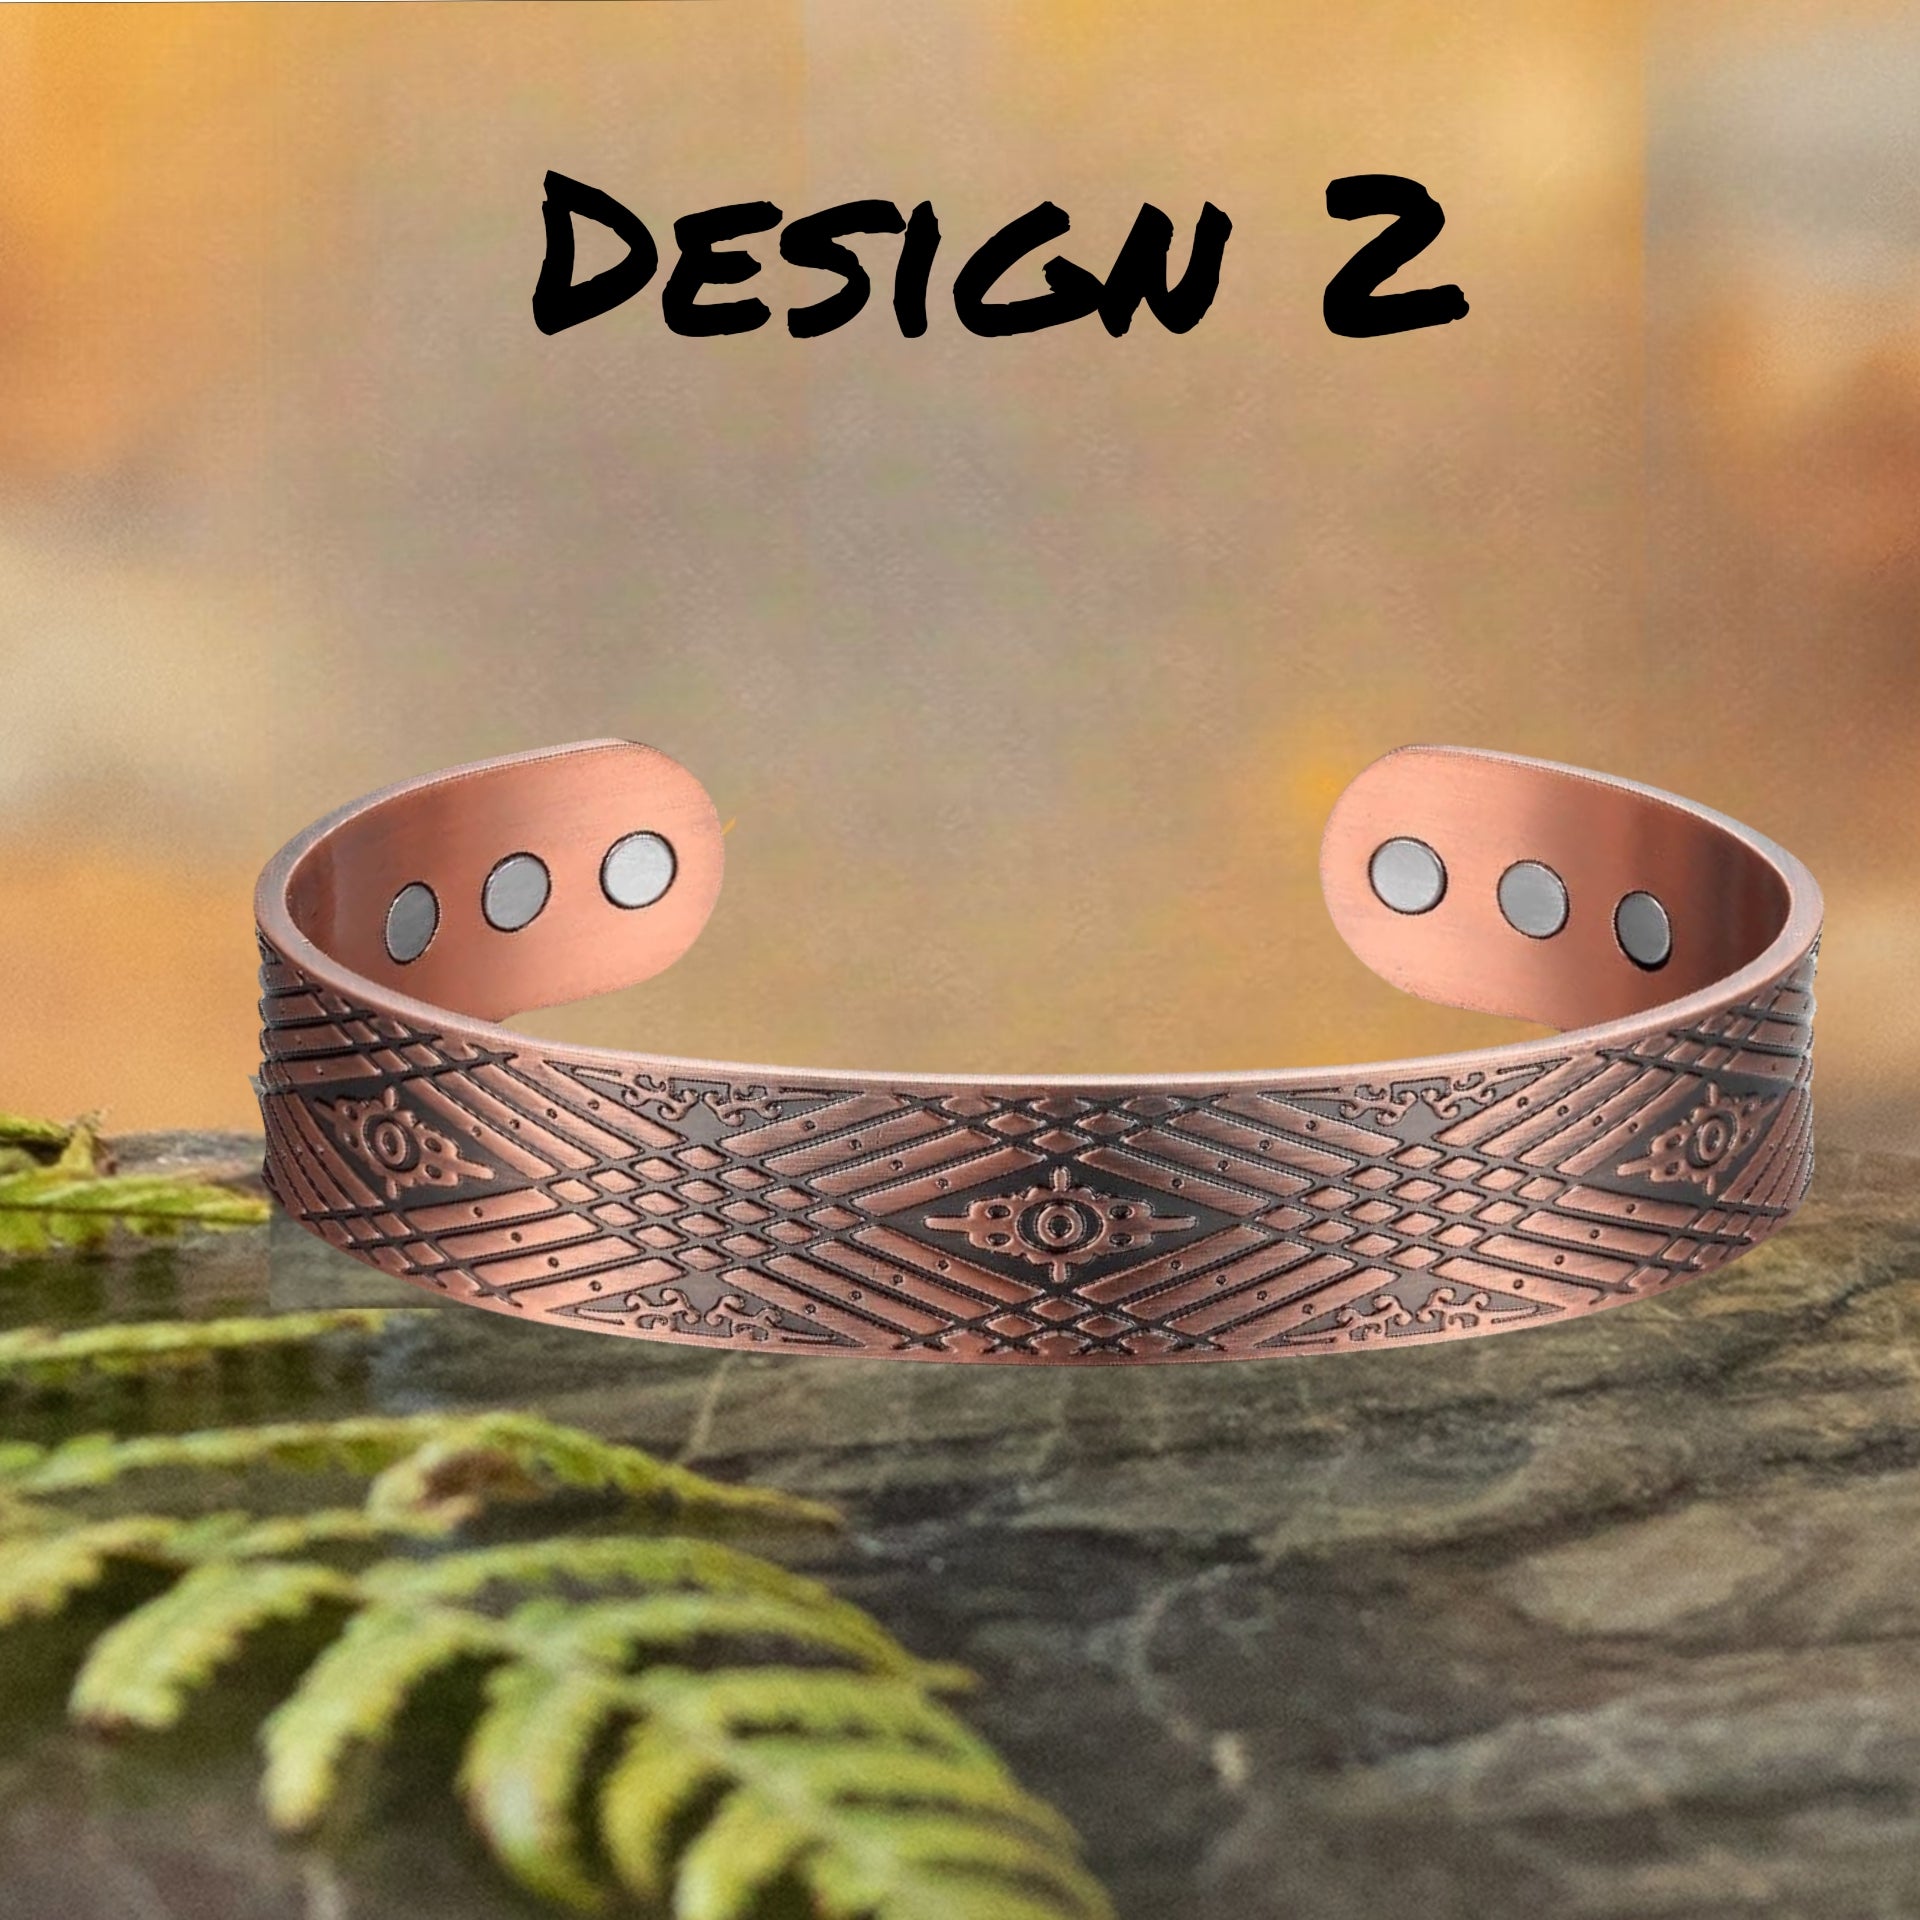 Copper Bracelet | Copper Bracelet Making | Metal Bracelet Making - YouTube